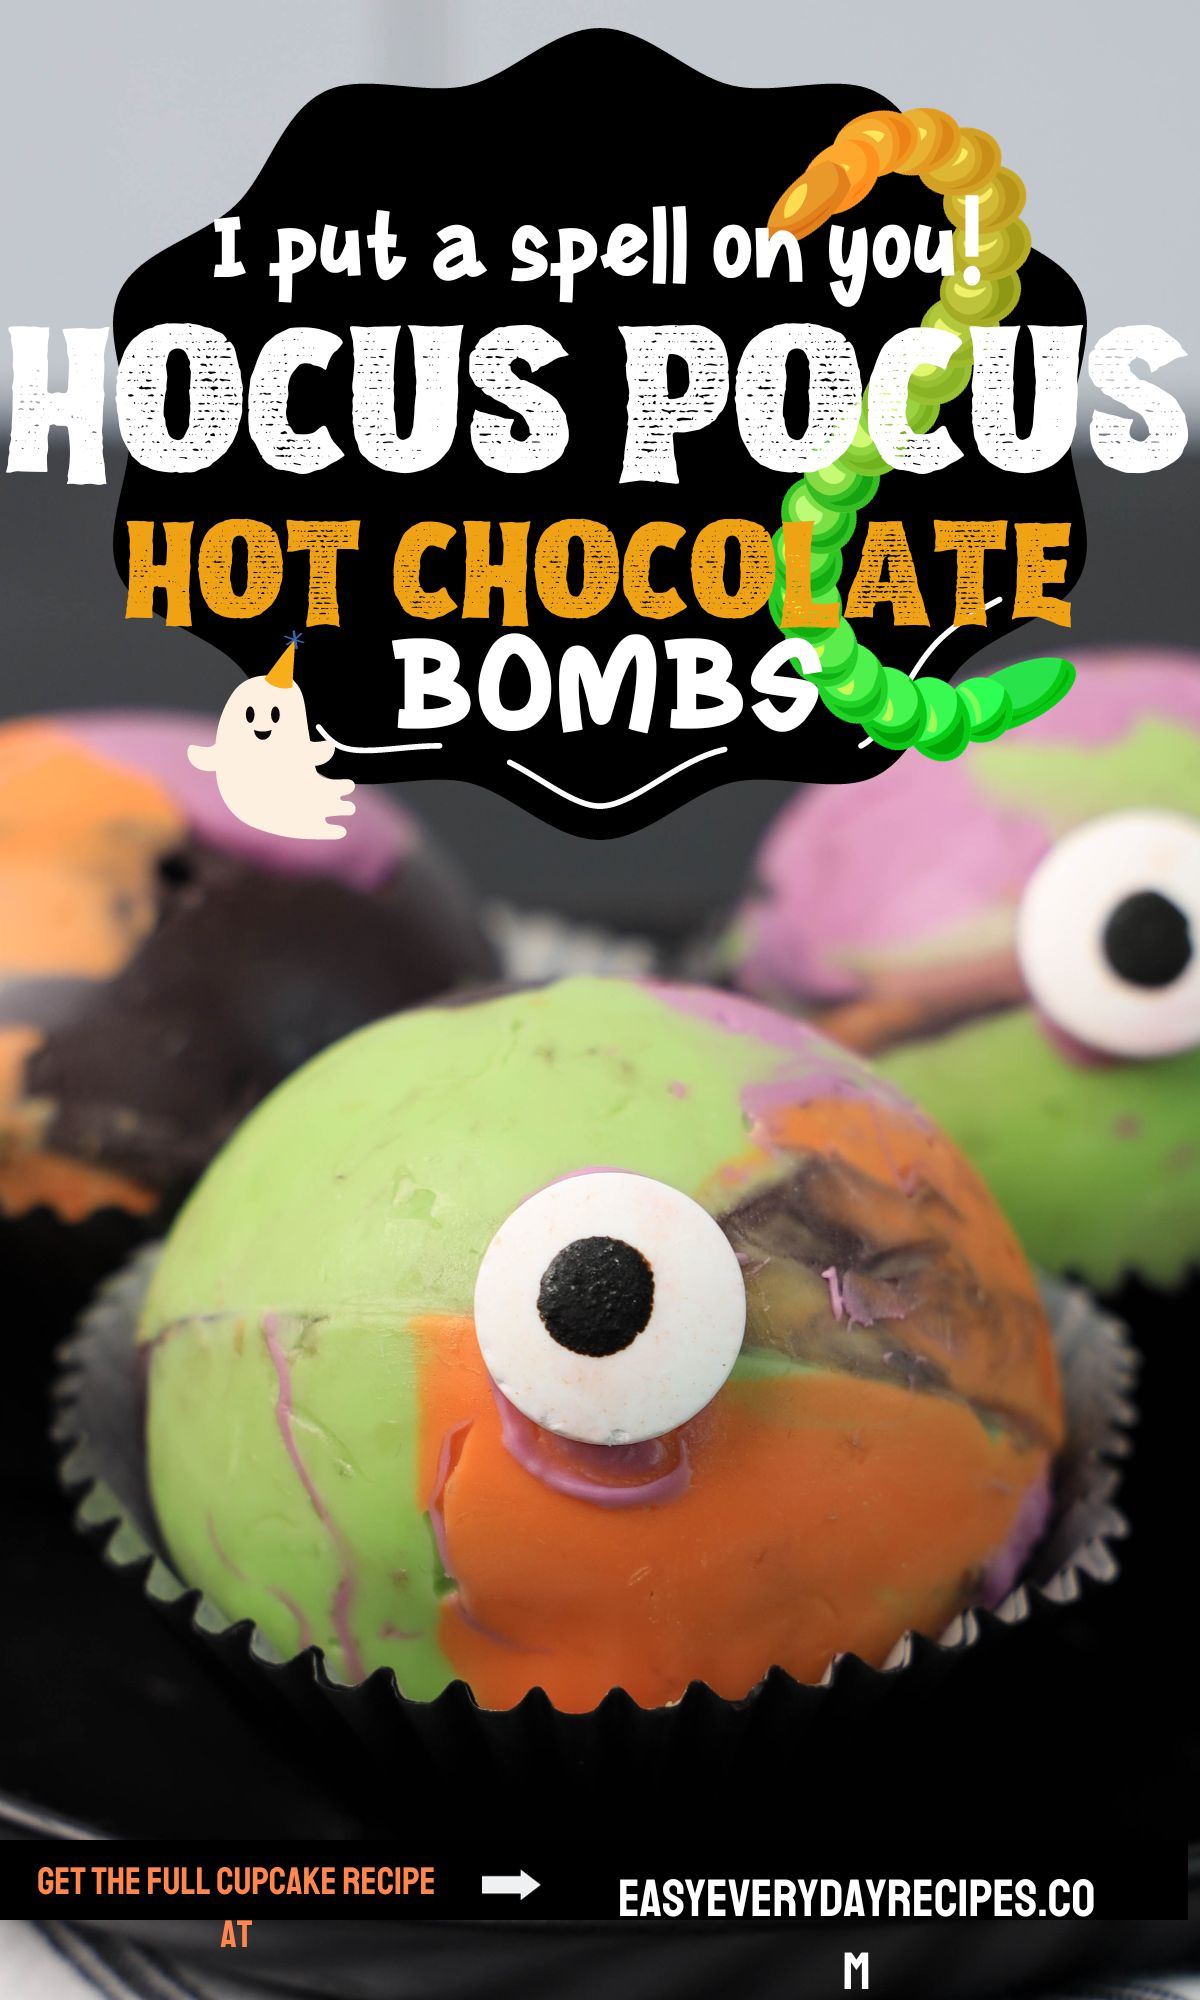 Hocus pocus hot chocolate bombs.